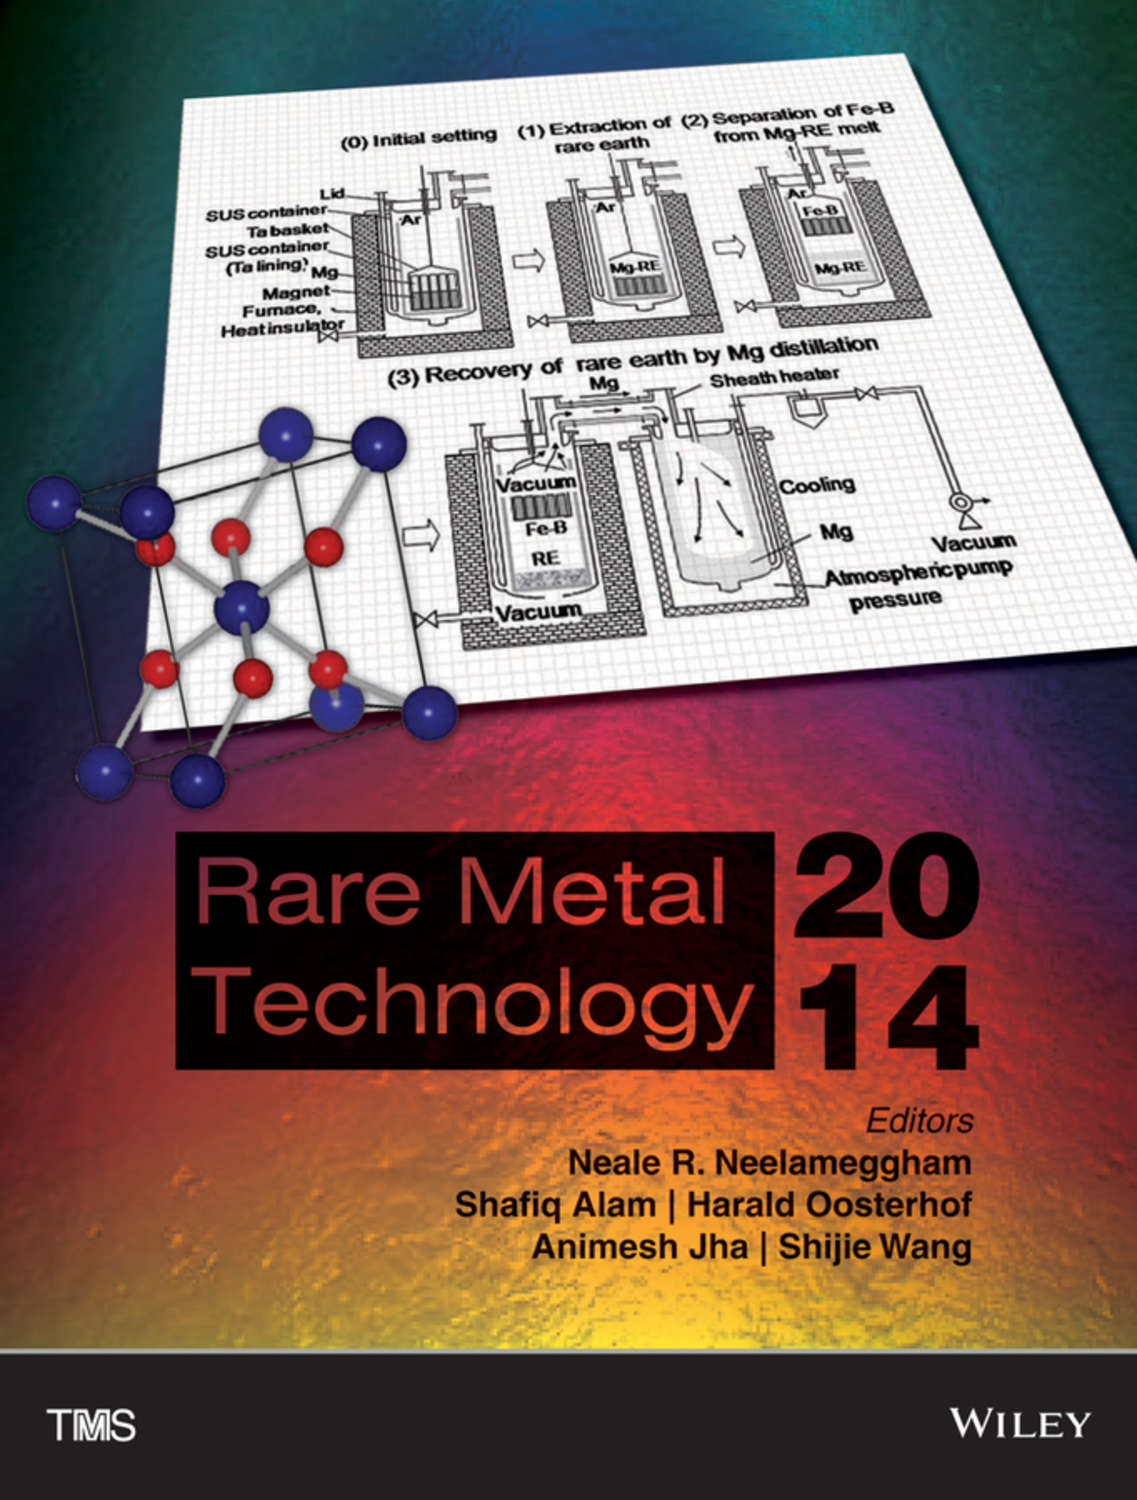 Technology metals. Metal Technology. Rare Earth Metals. Rare Metals lecture presentation.